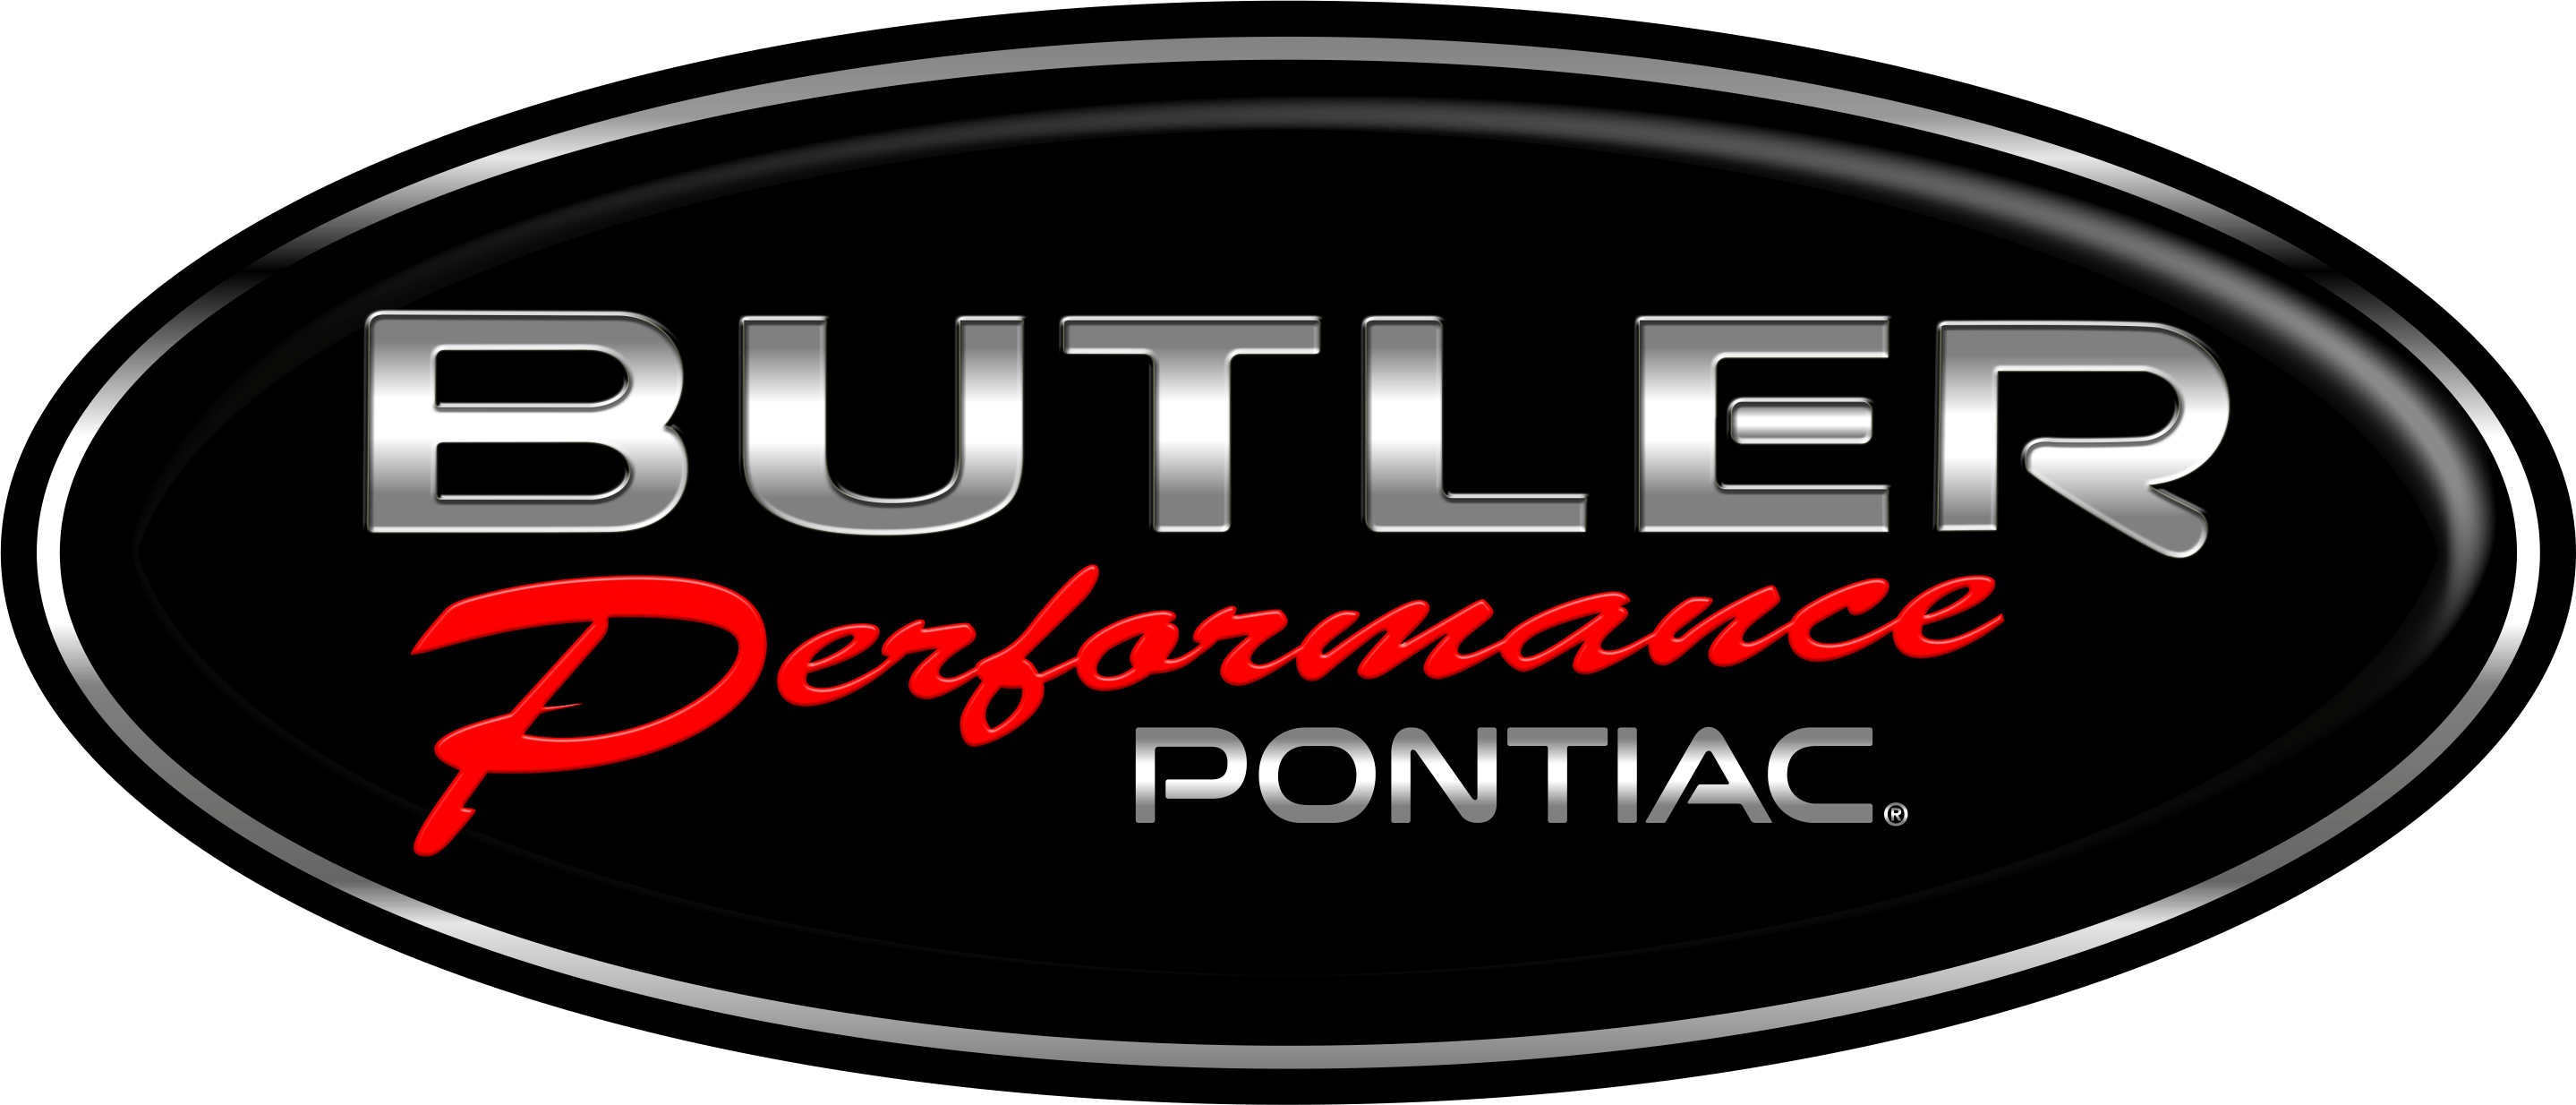 Performance Logo - Butler-Performance-logo-black-Pontiac - The Bandit Run | The Bandit Run